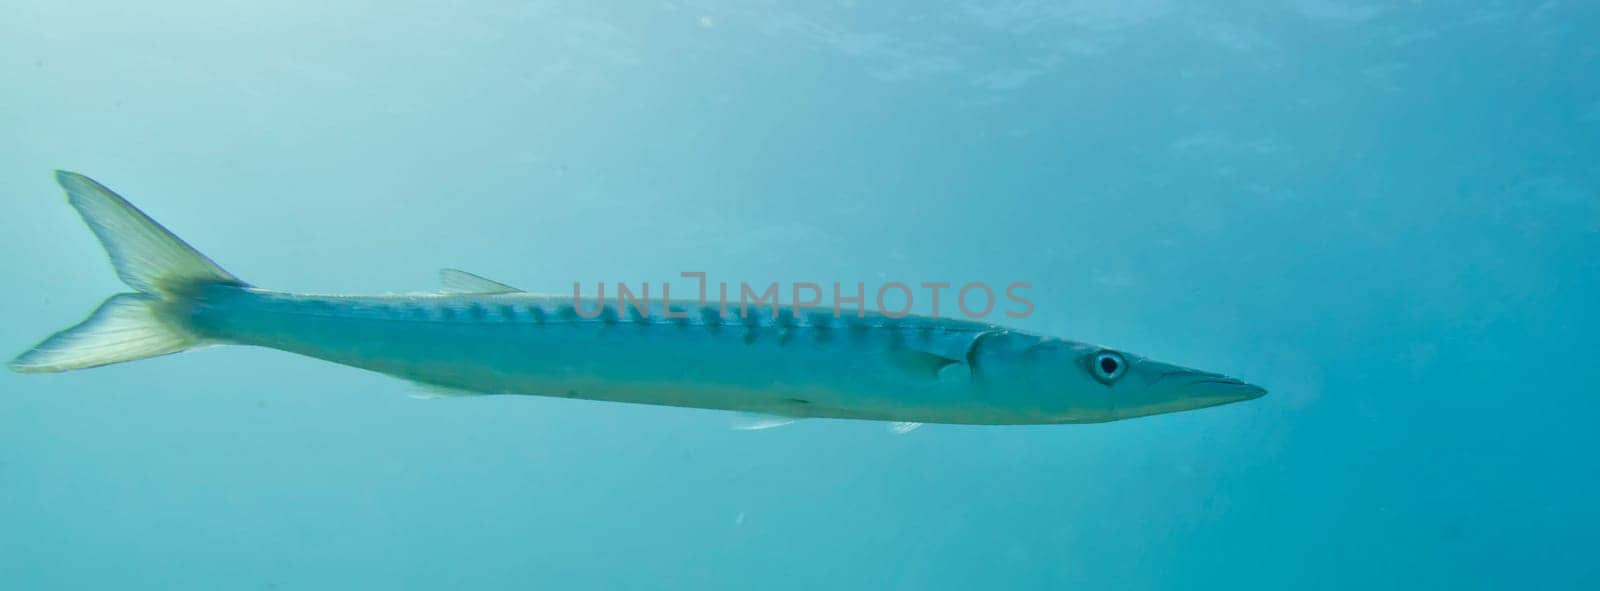 Barracuda Fish underwater close up portrait